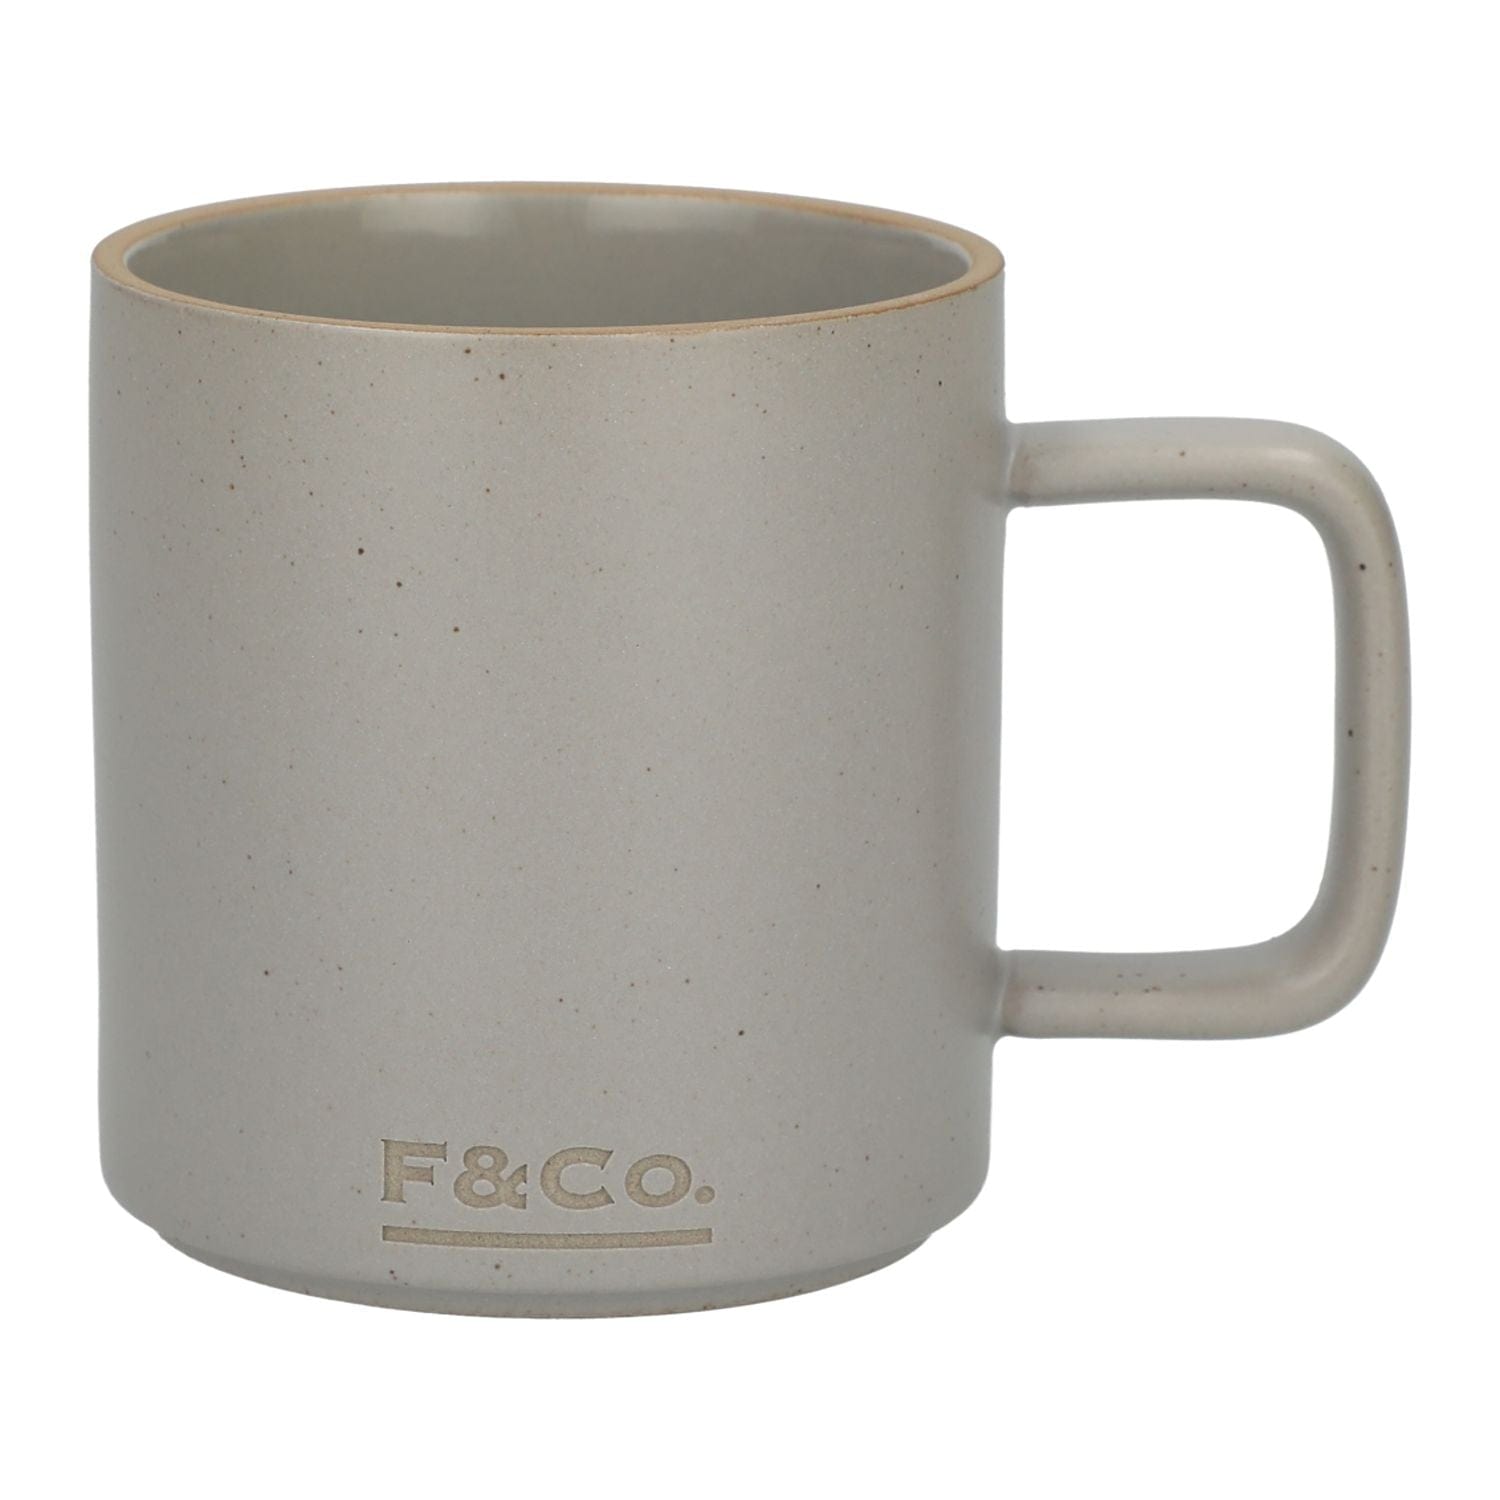 Field & Co Accessories Grey / One Size Field & Co. - Stoneware Mug 11oz